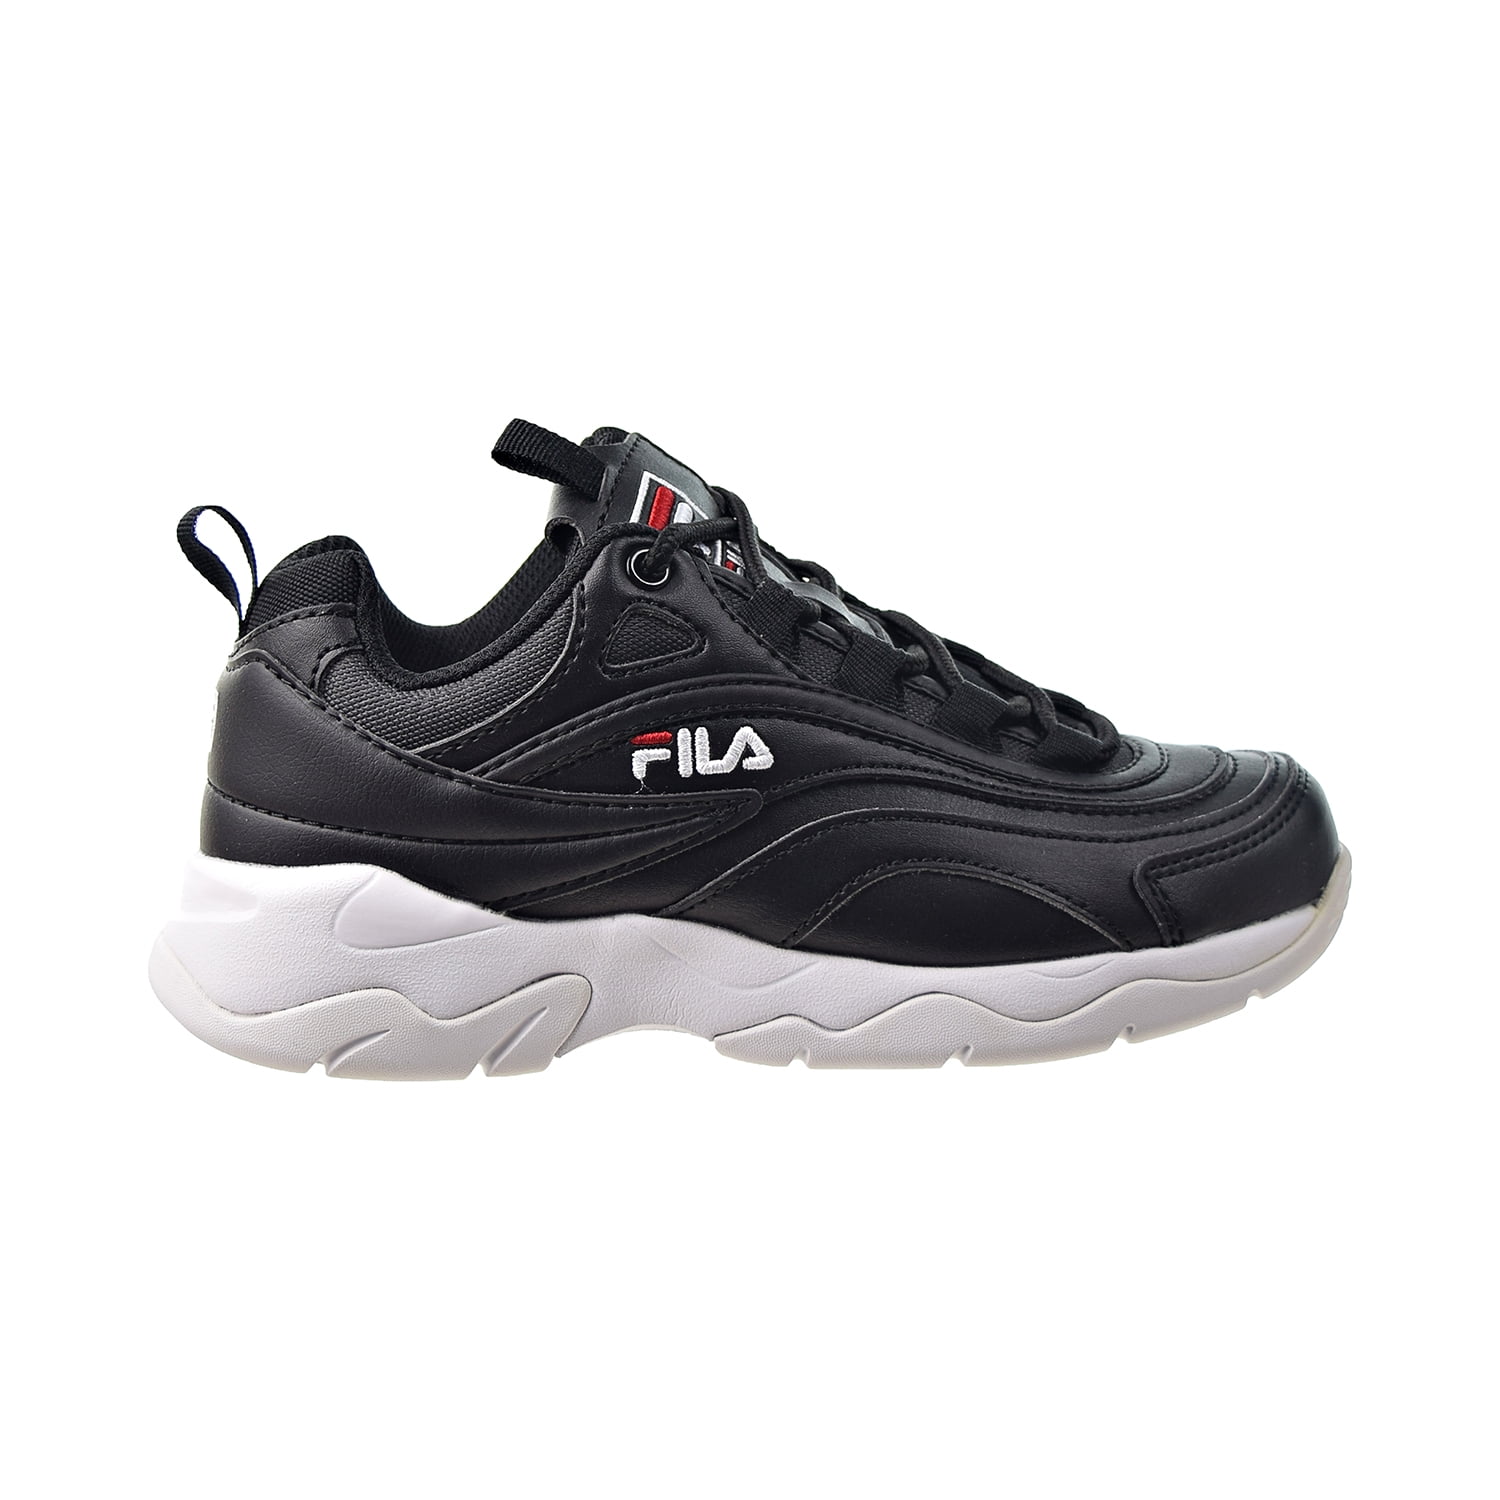 Fila Ray Women's Shoes Black-White 5rm00521-014 - Walmart.com